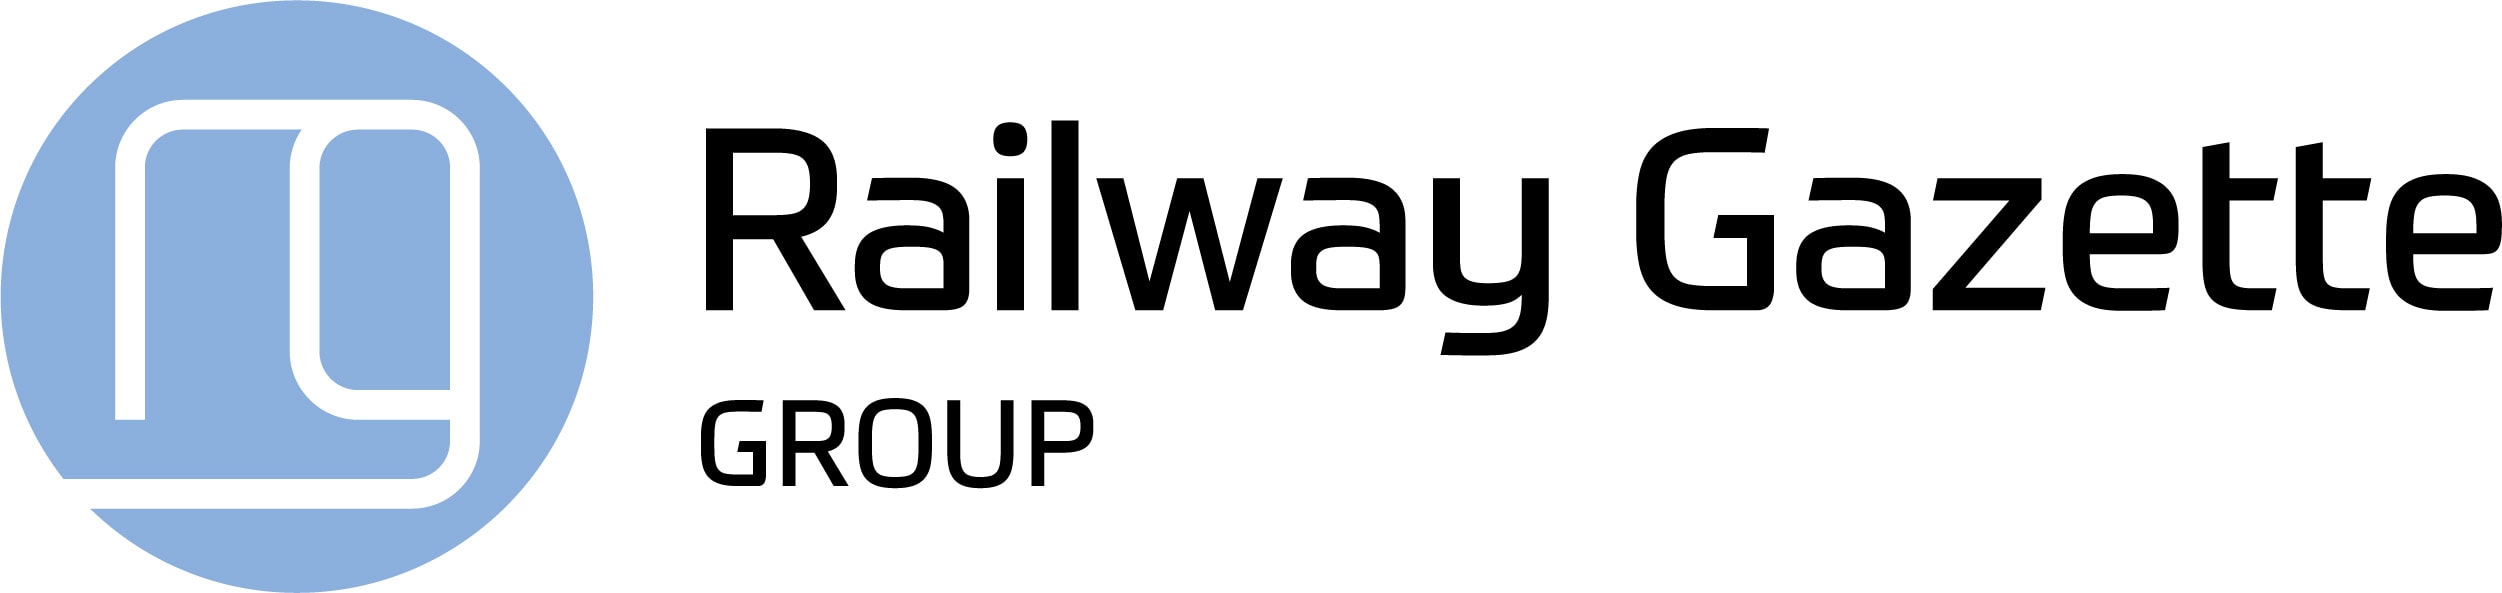 Railway gazette logo